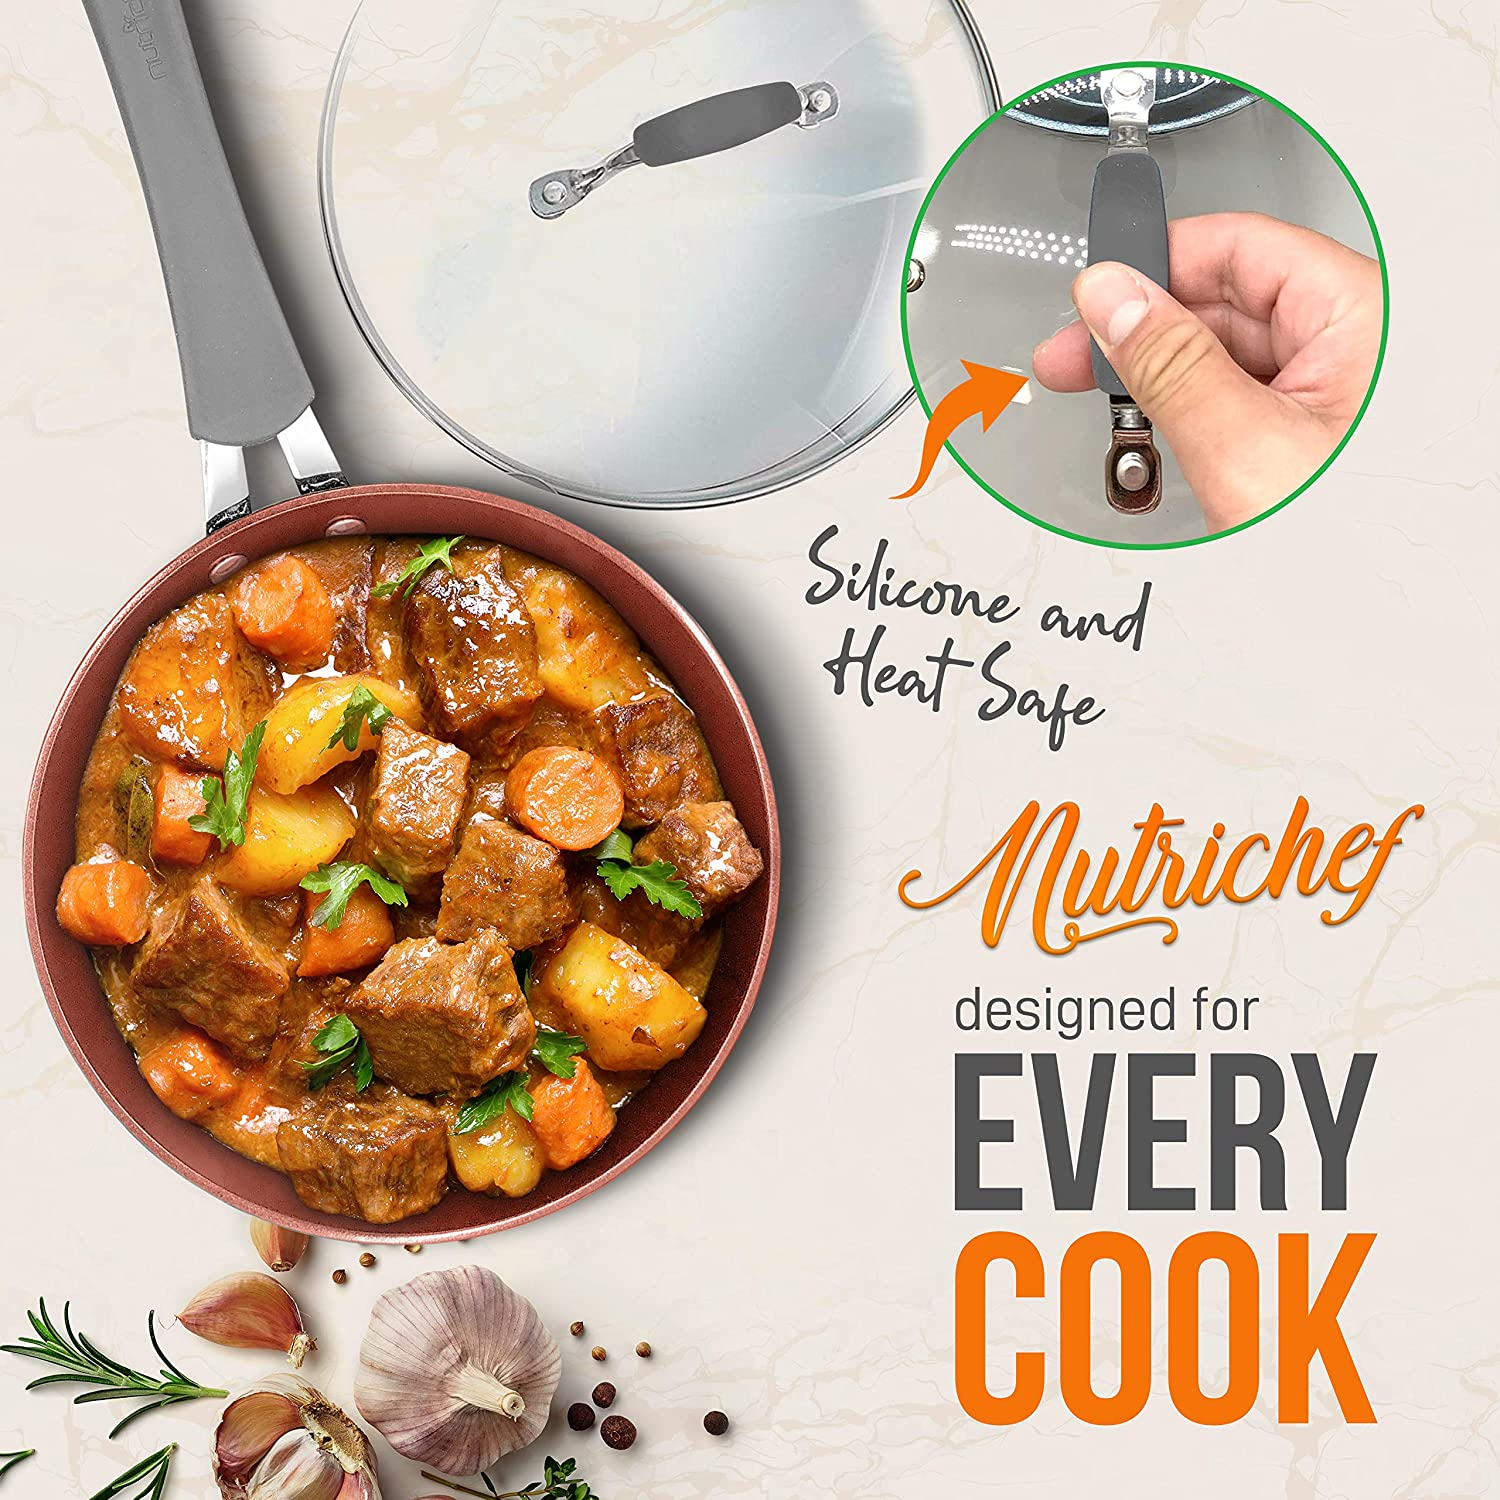 NutriChef 11-Piece Nonstick Kitchen Cookware Set, Ceramic Pots and Pan Set with Saucepan, Frying Pans, Cooking Pots, Dutch Oven Pot, Lids, Utensil -NCCW11DS